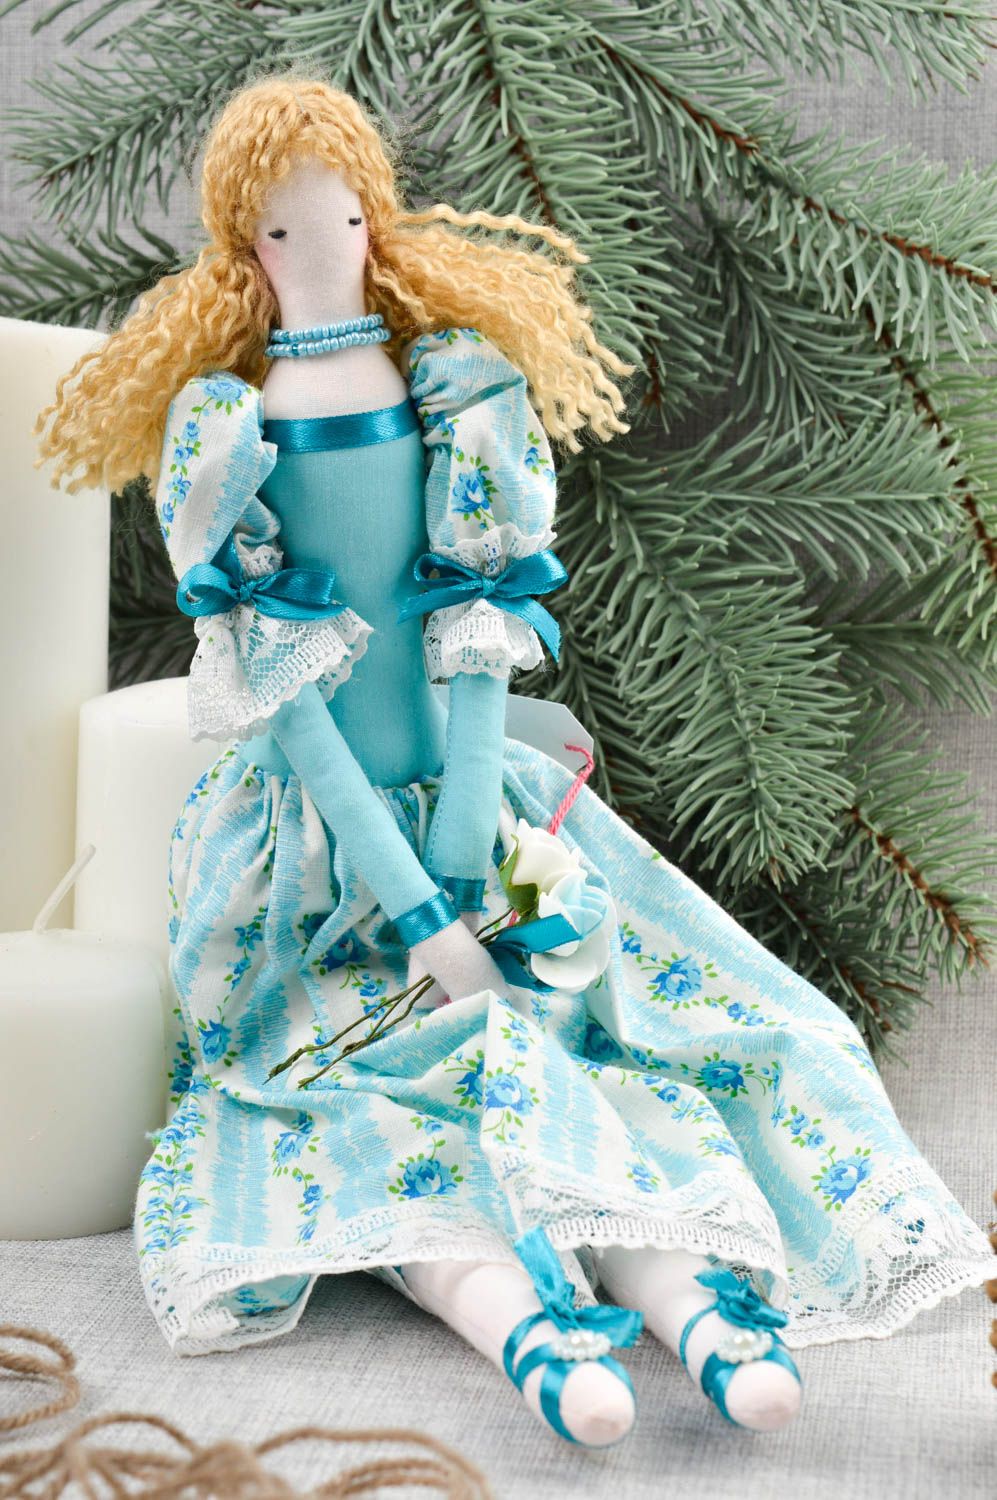 Stylish handmade soft toy unusual rag doll home decoration decorative use only photo 1